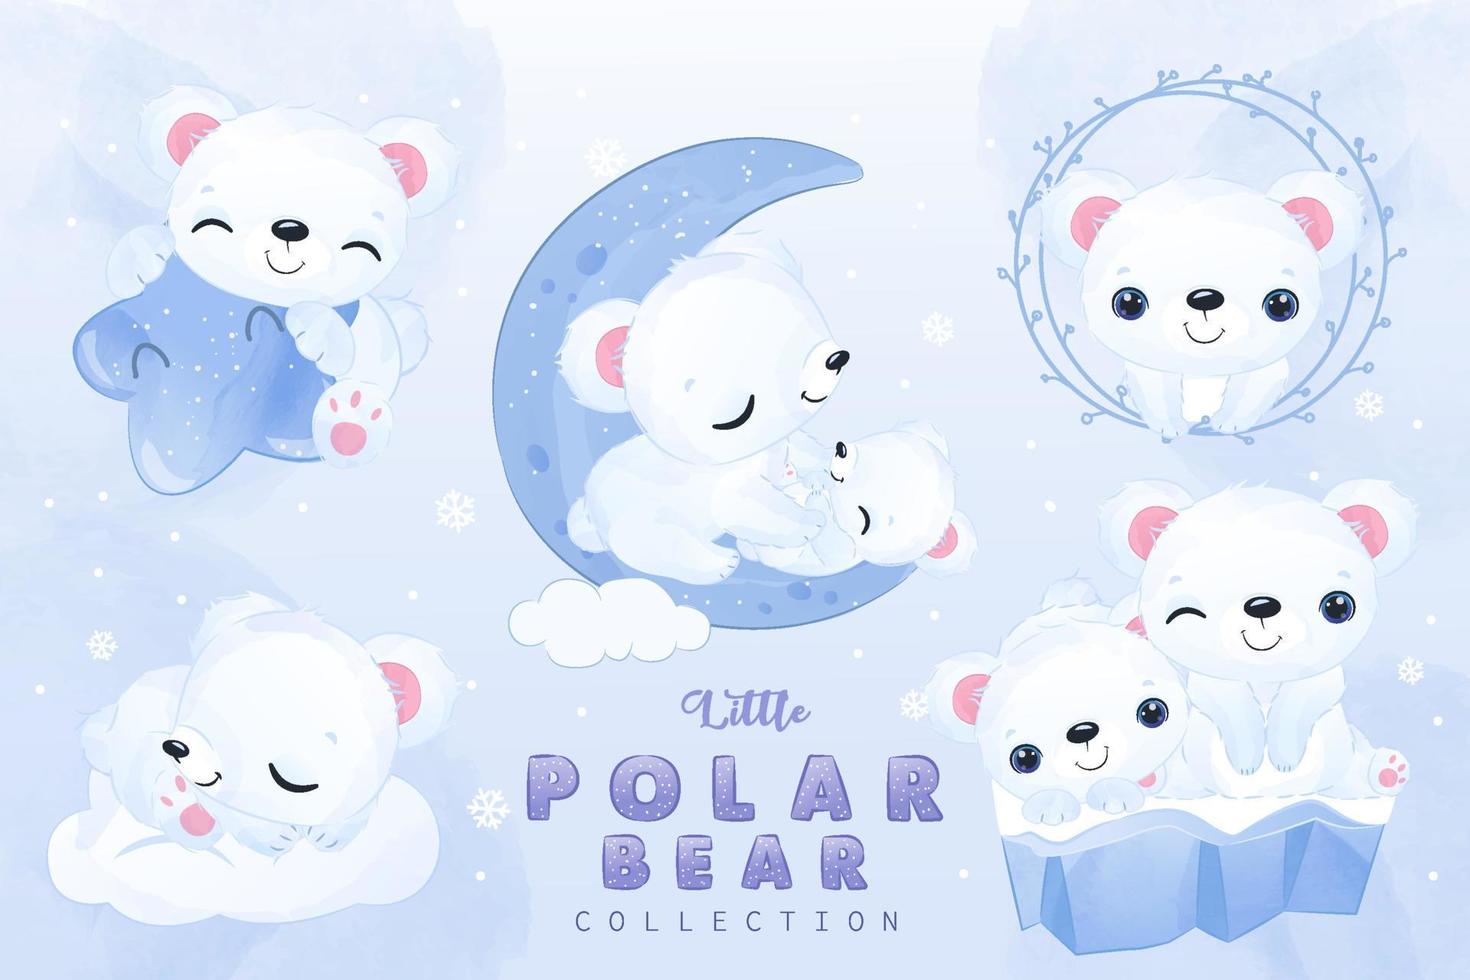 Cute little polar bear clipart collection in watercolor illustration vector